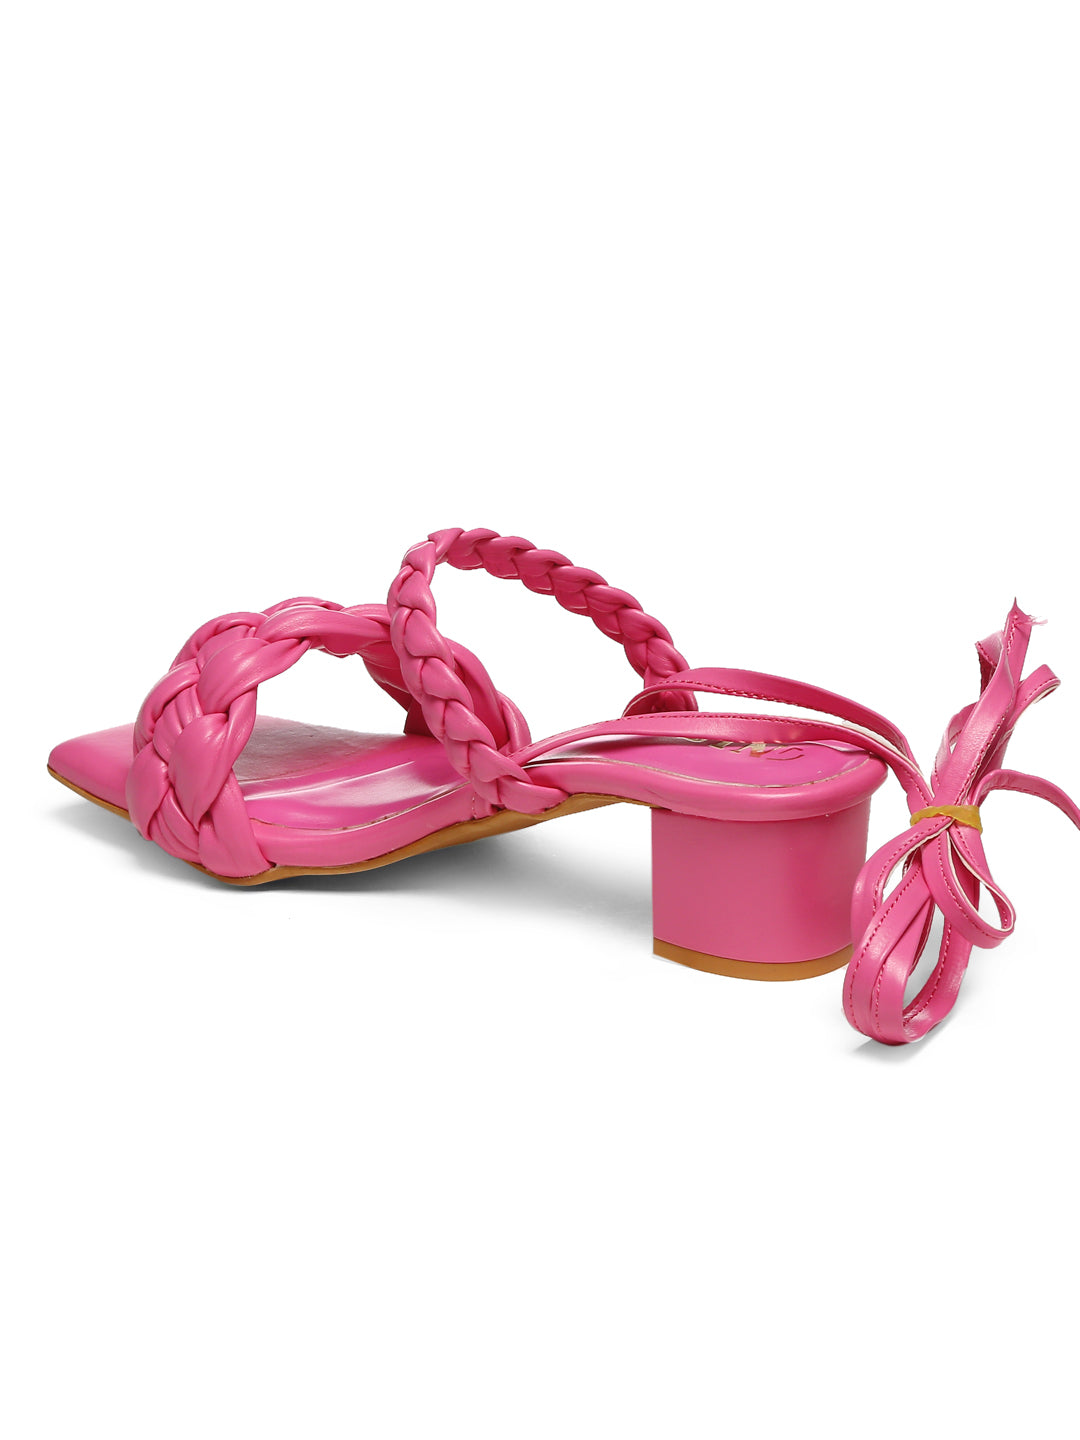 GNIST Hot Pink Braided Tie up Block Heel Sandal